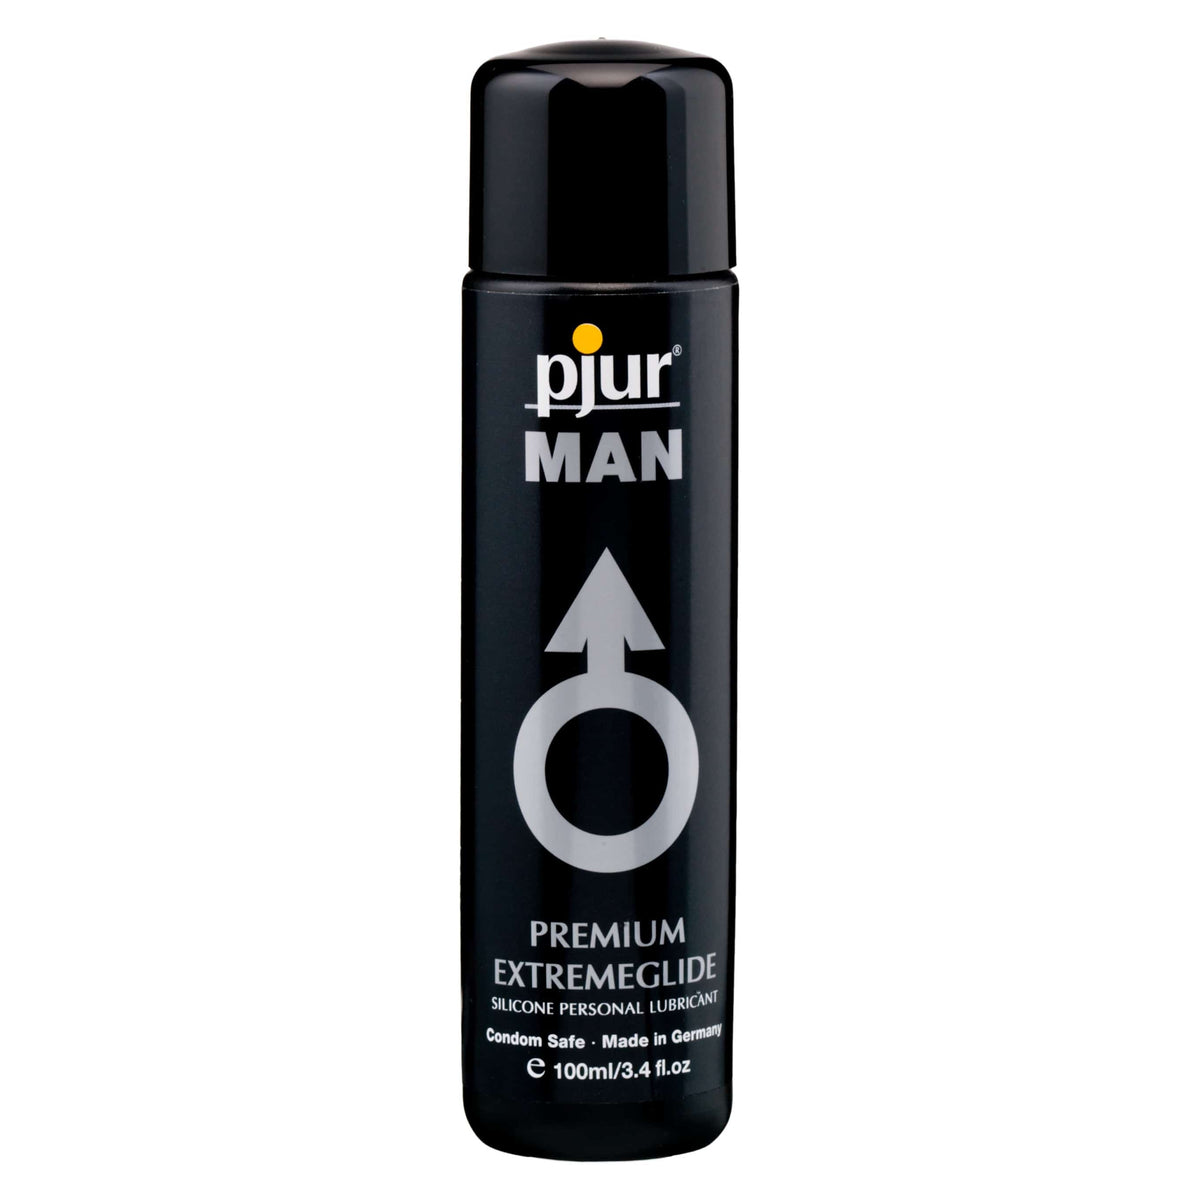 Pjur - Man Premium Extreme Glide Silicone Personal Lubricant 100ml -  Lube (Silicone Based)  Durio.sg